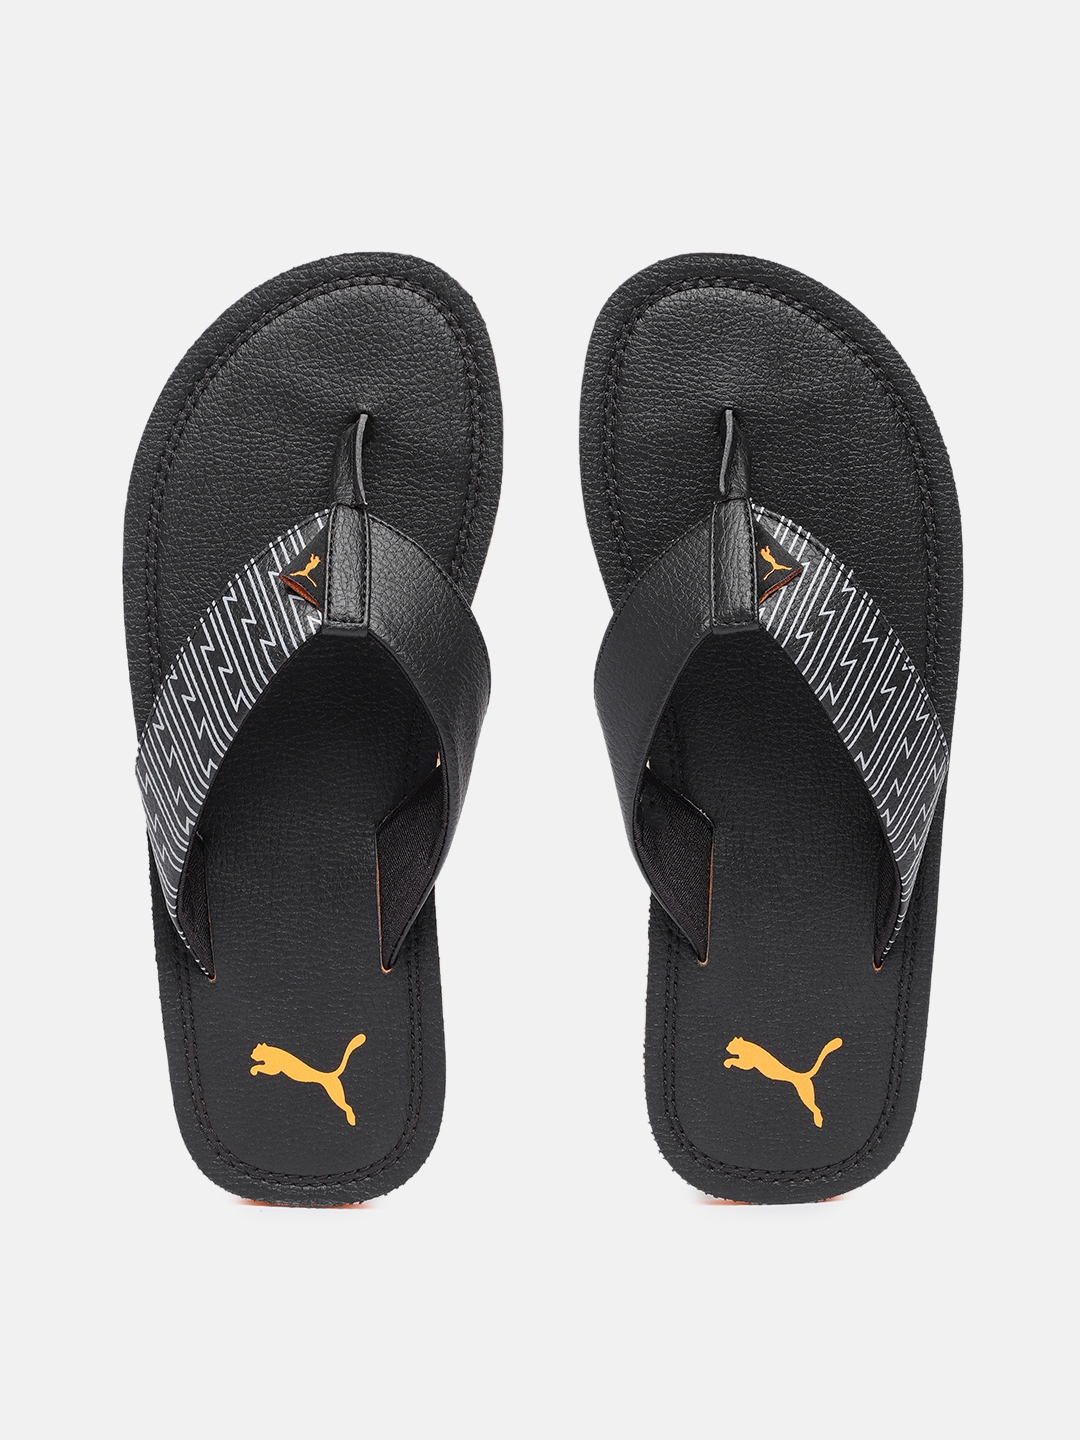 Buy Puma Men Black Solid Comfort Sandals - Sandals for Men 18814690 ...